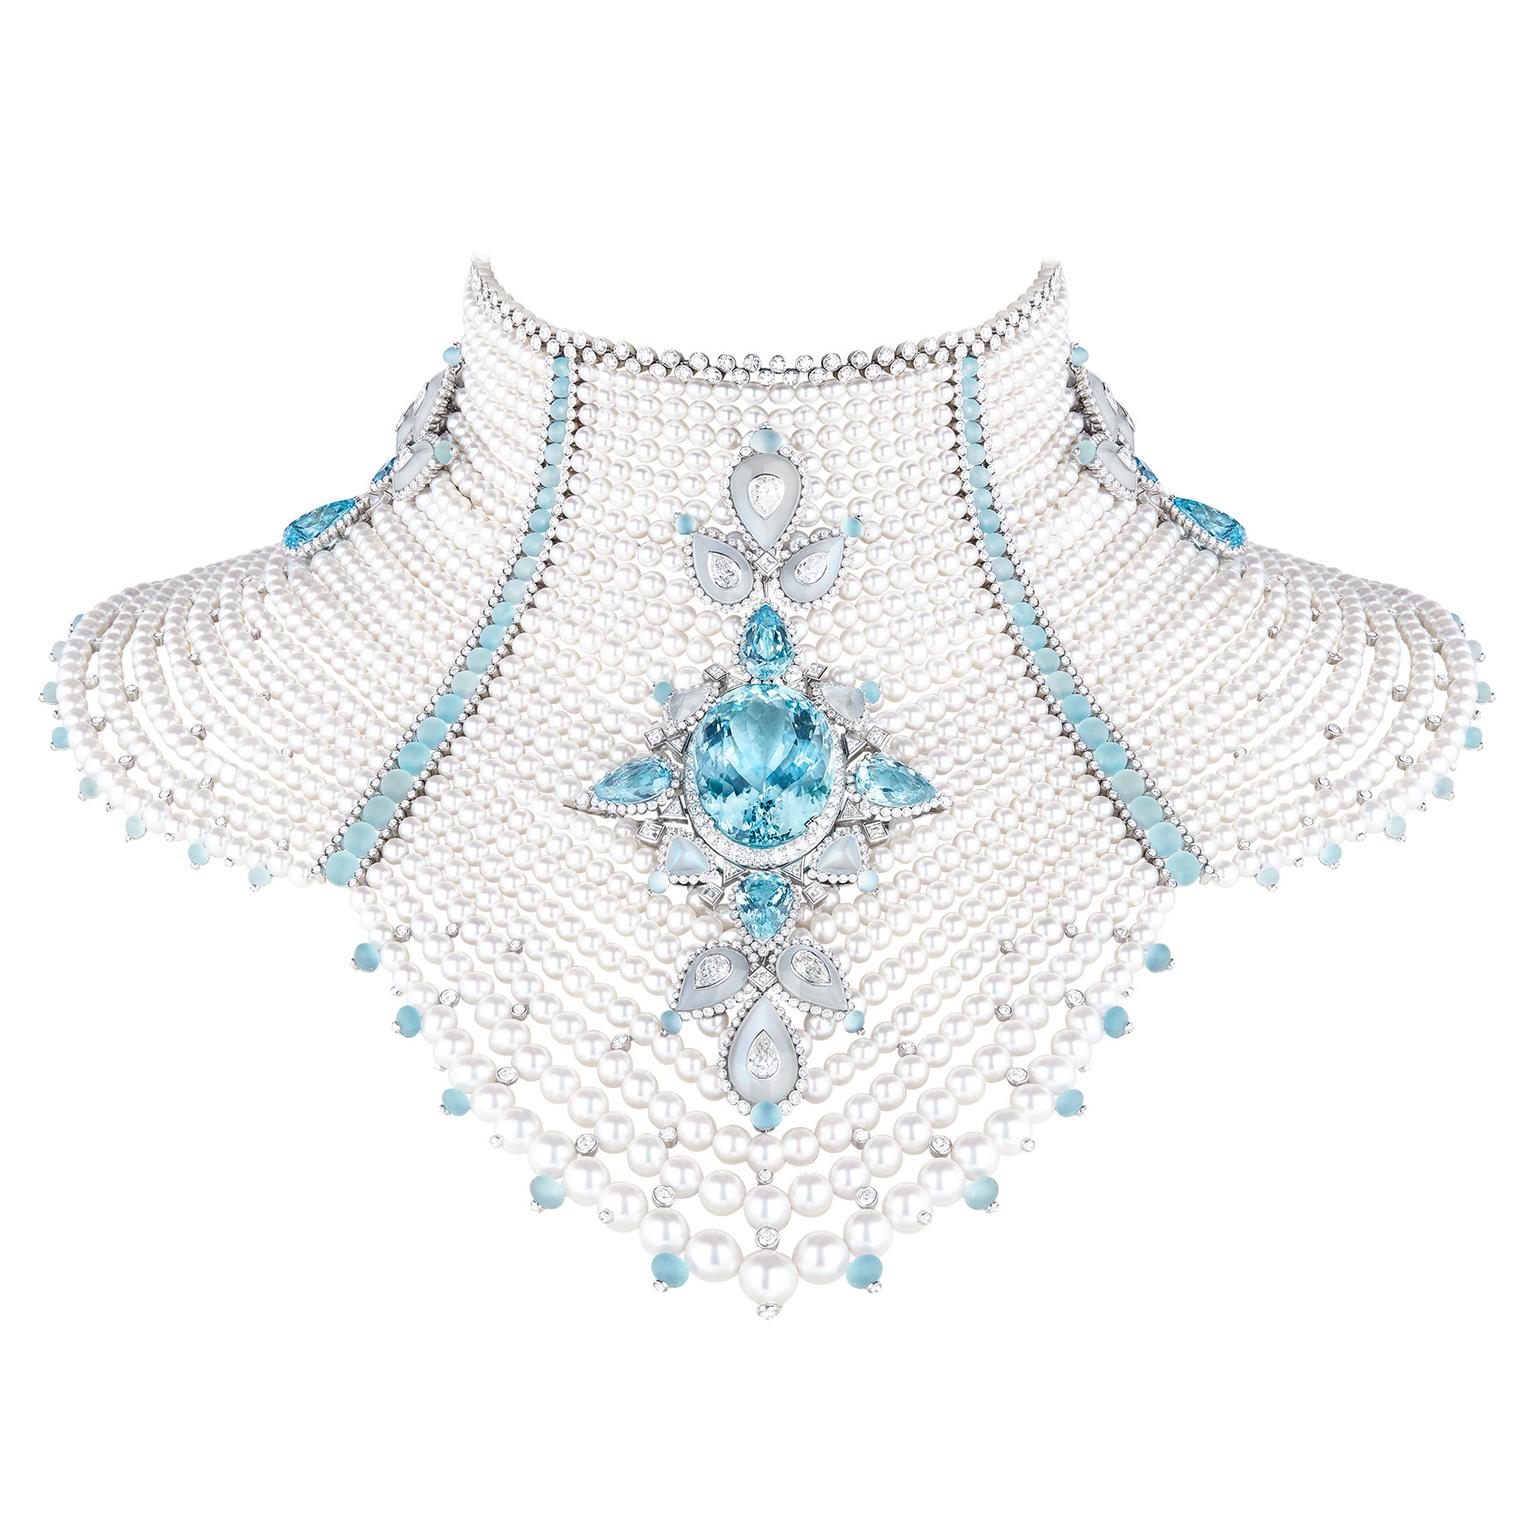 Boucheron Hiver Imperial Baikal necklace